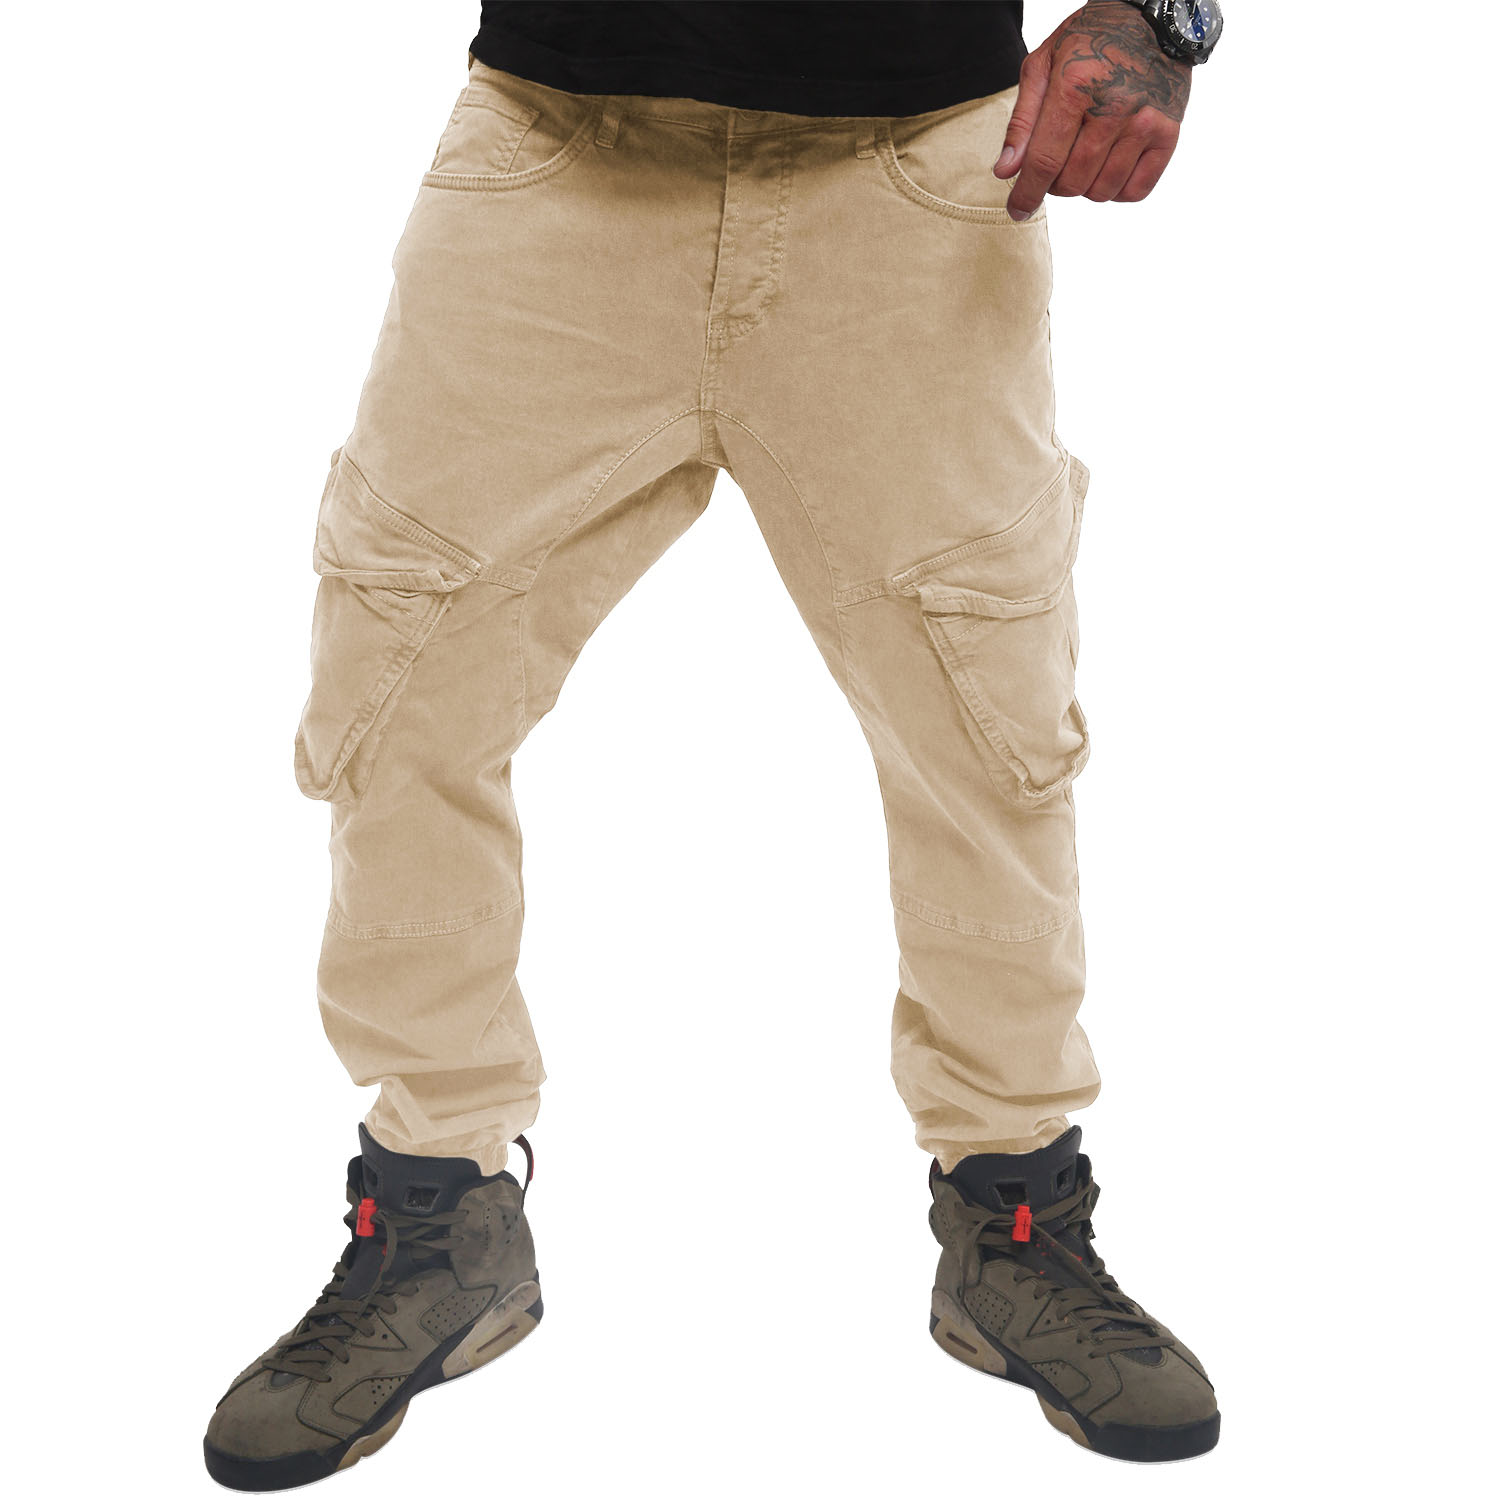 Men's Outdoor Vintage Multi-pocket Chic Tactical Pants